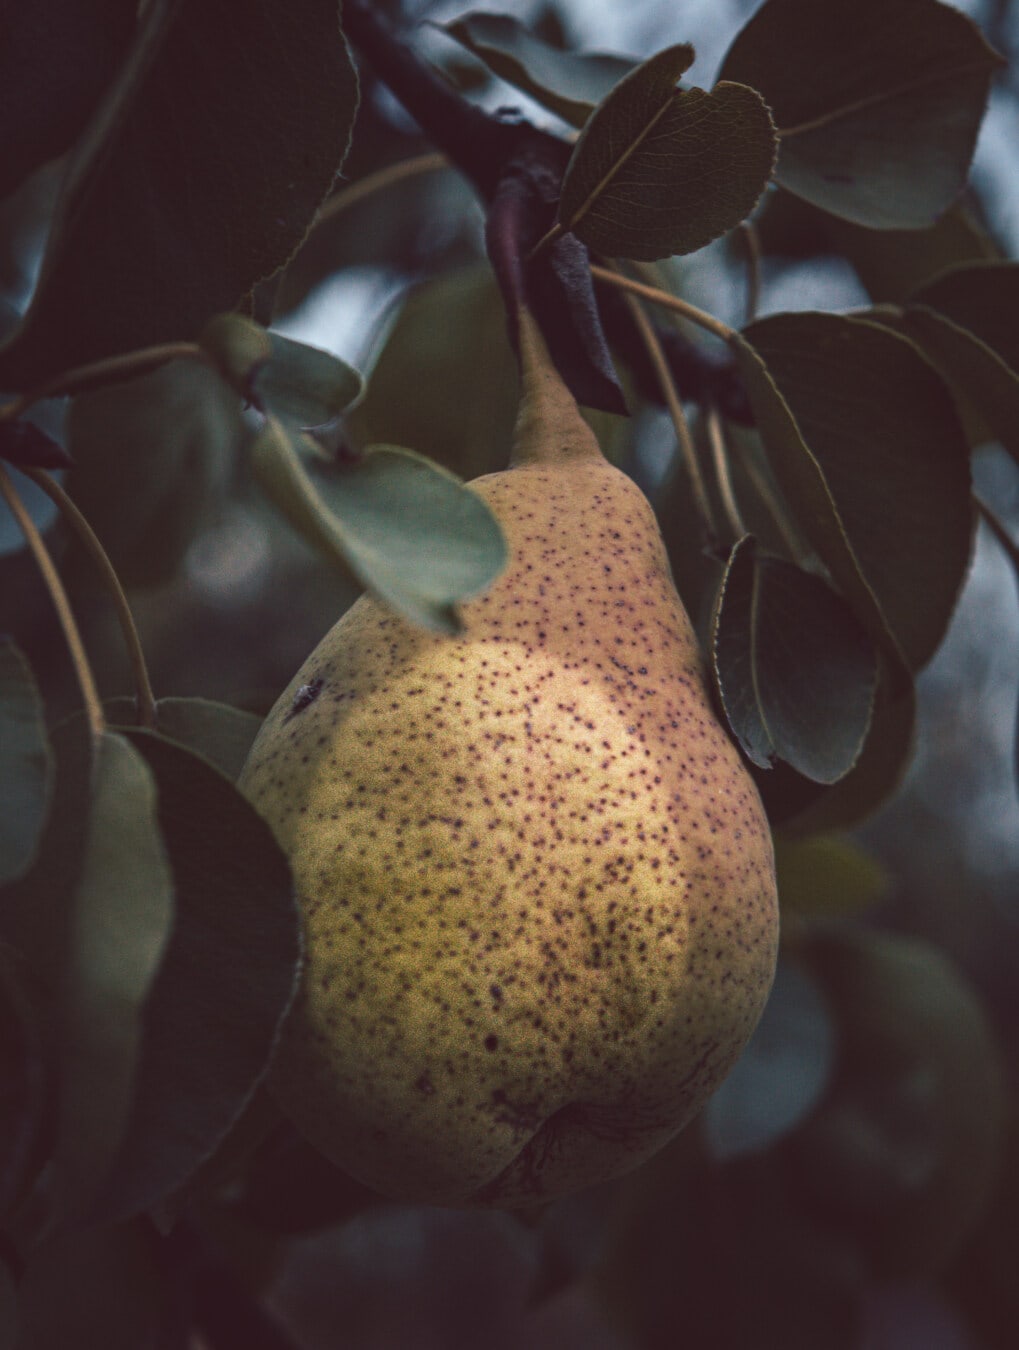 Pohon buah pir